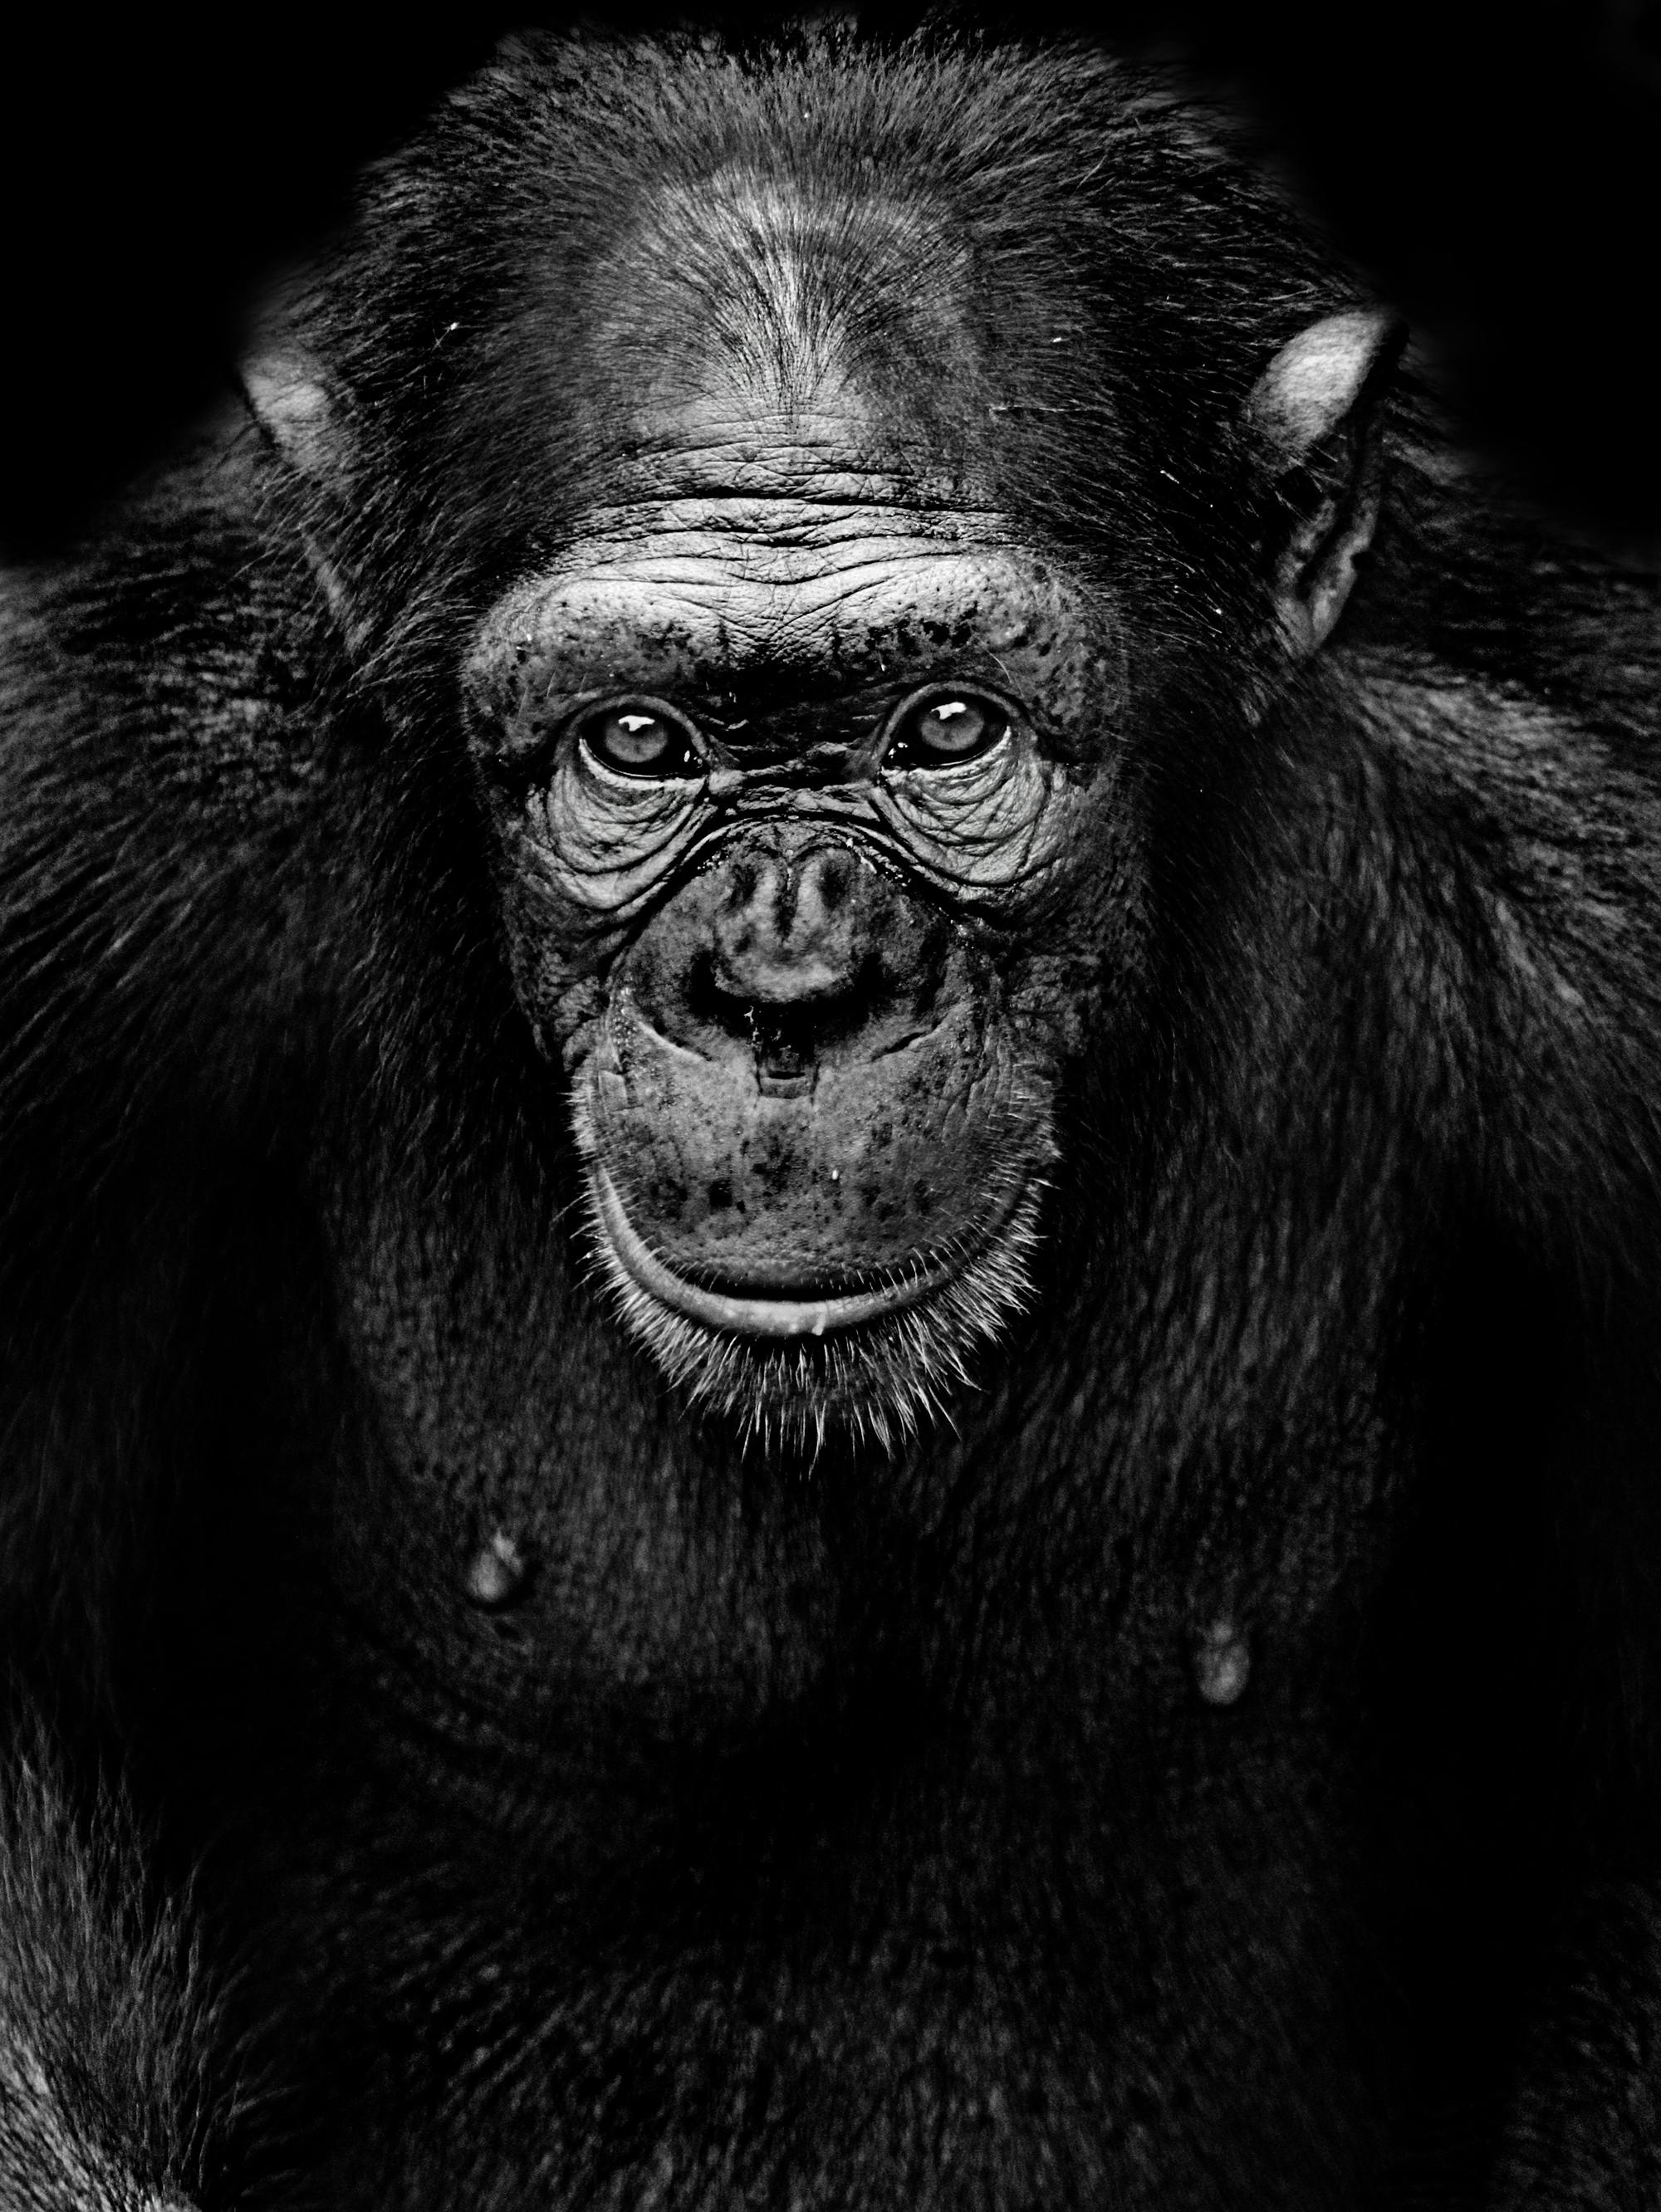 macaco chimpanzé macaco close-up 17453798 Foto de stock no Vecteezy